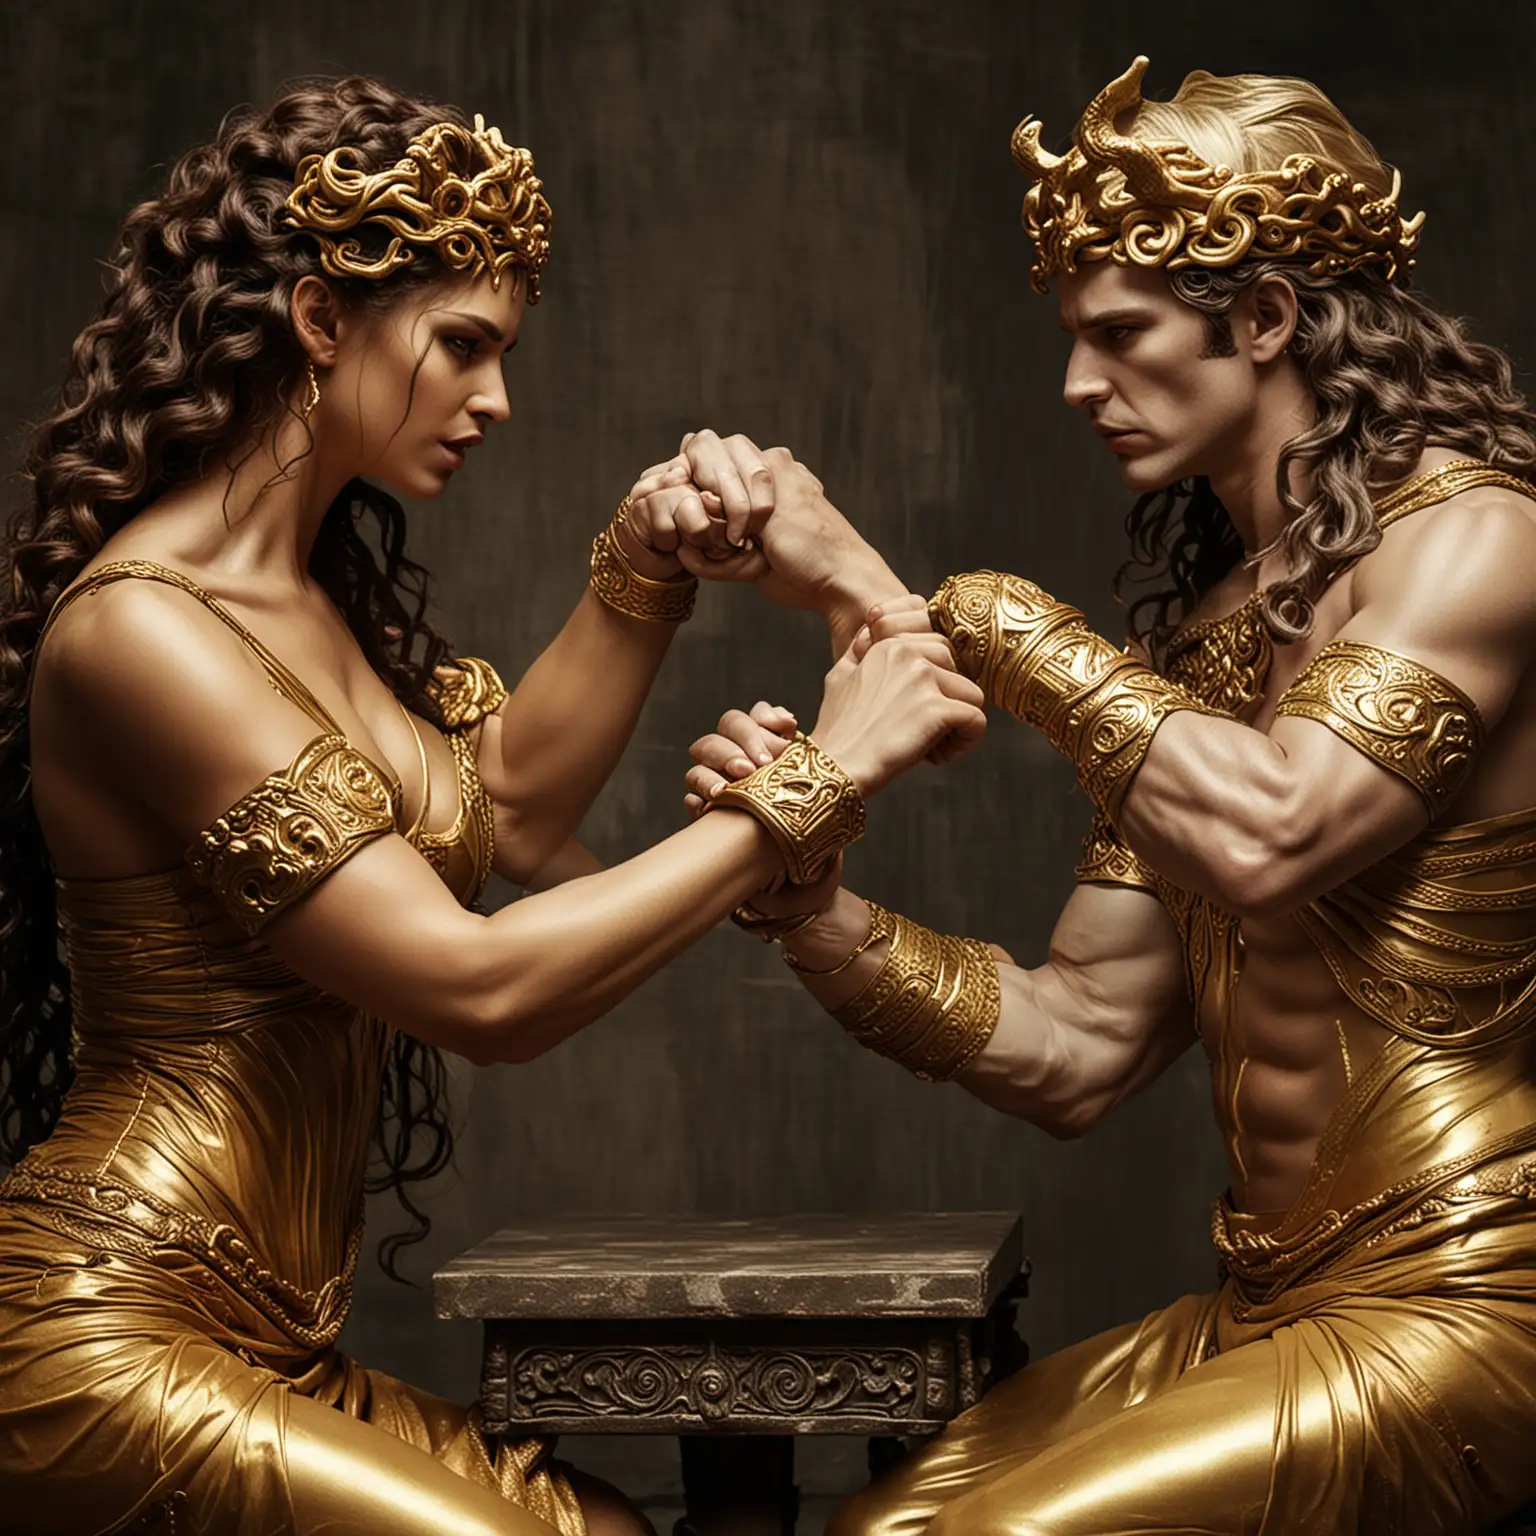 Mythical Clash Medusa vs King Midas Arm Wrestling Competition